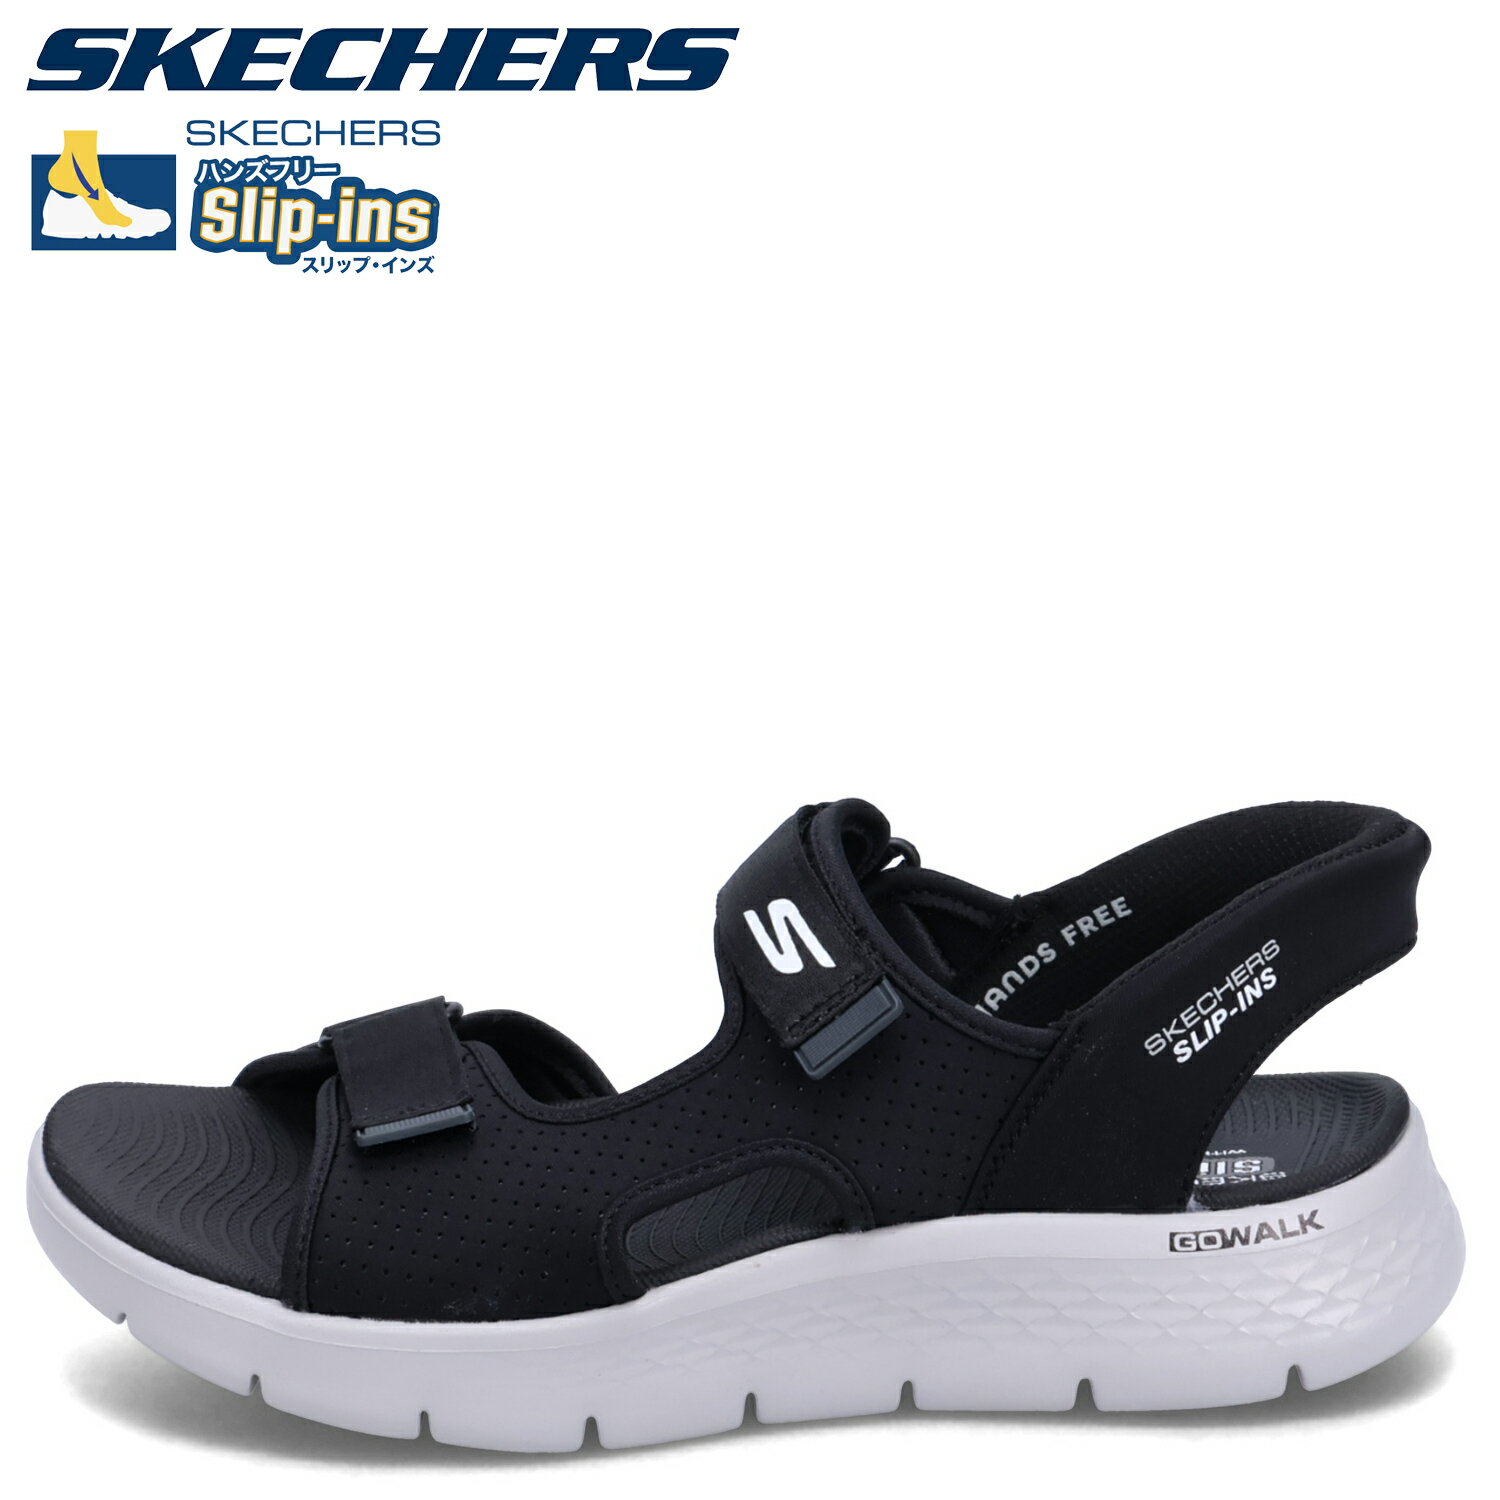 SKECHERS SLIP-INS GO WALK FLEX SANDAL スケッチャーズ スリップインズ ゴーウォーク フレックス SD サンダル ストラップサンダル メンズ ブラック 黒 229210